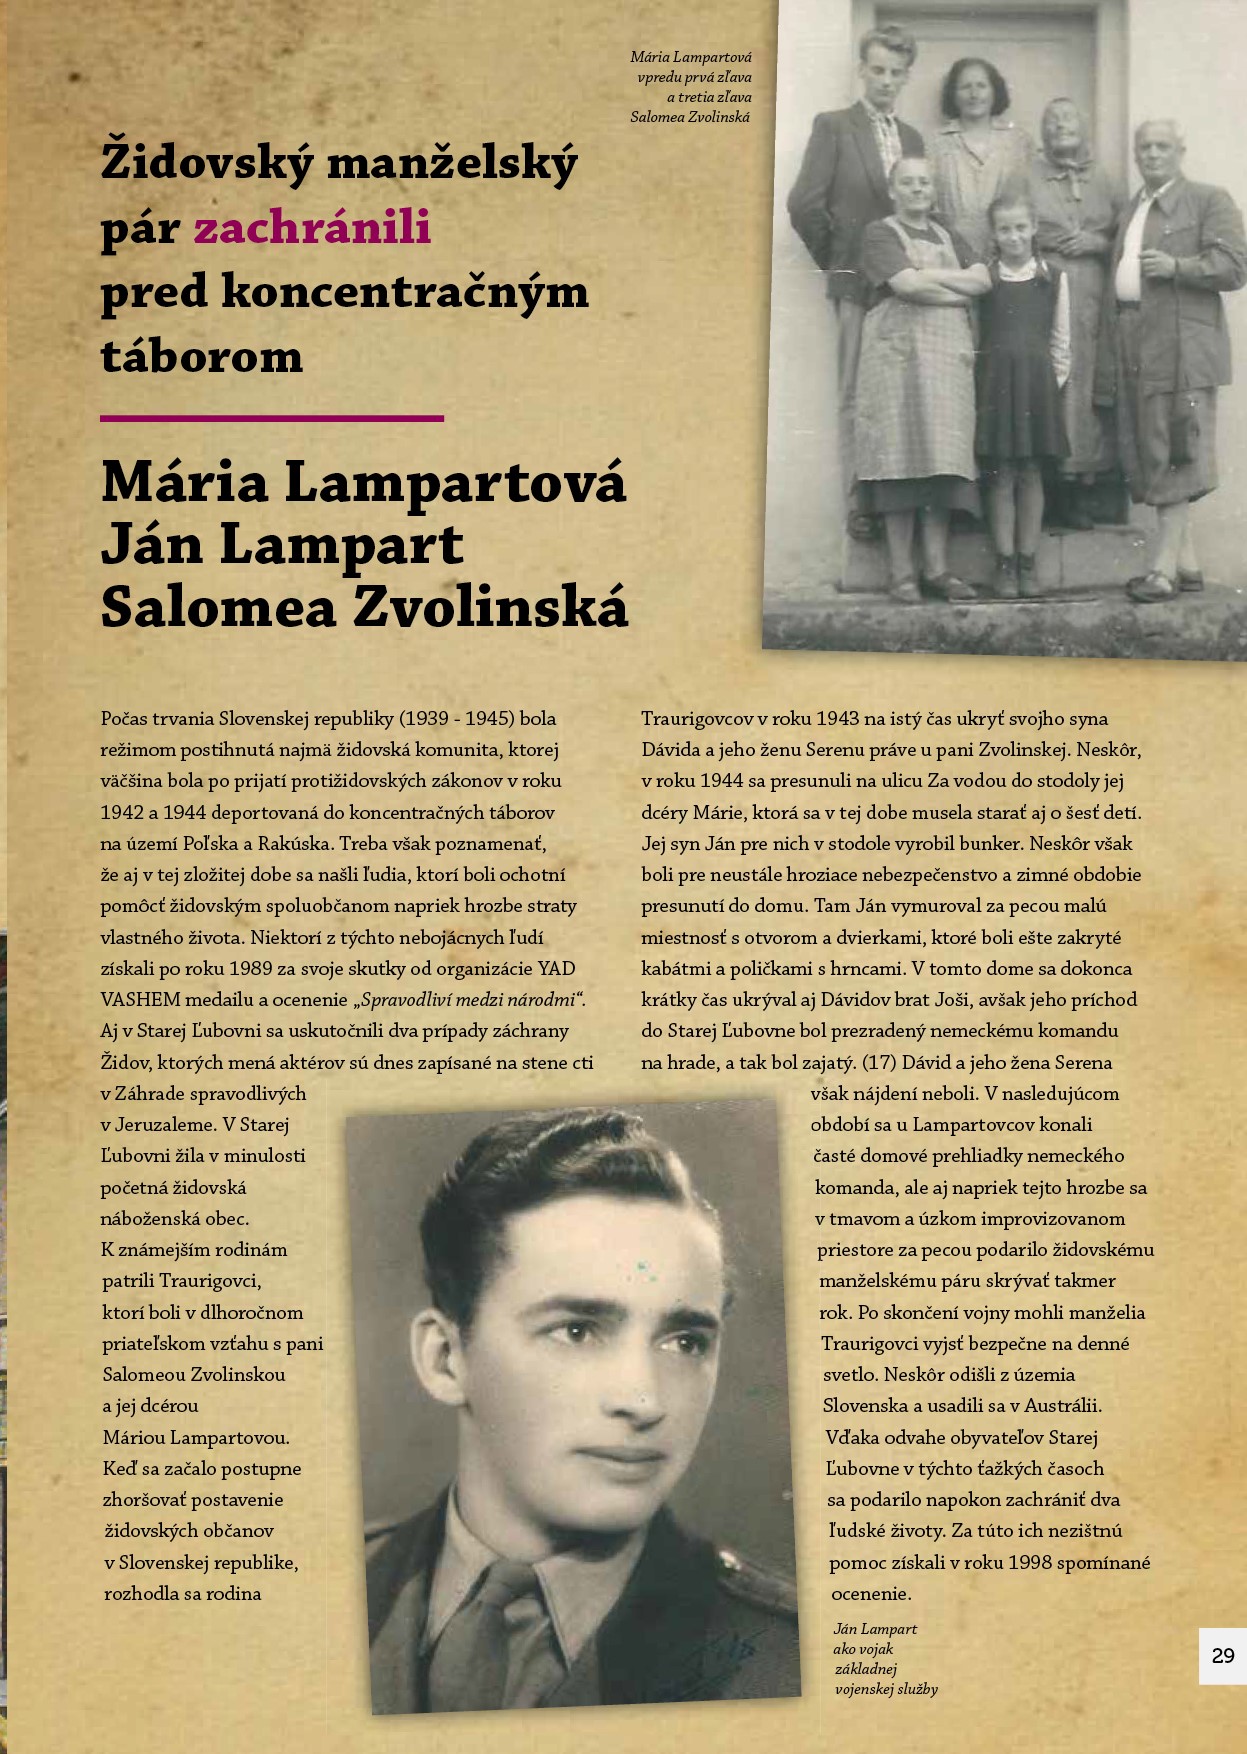 Mária Lampartová